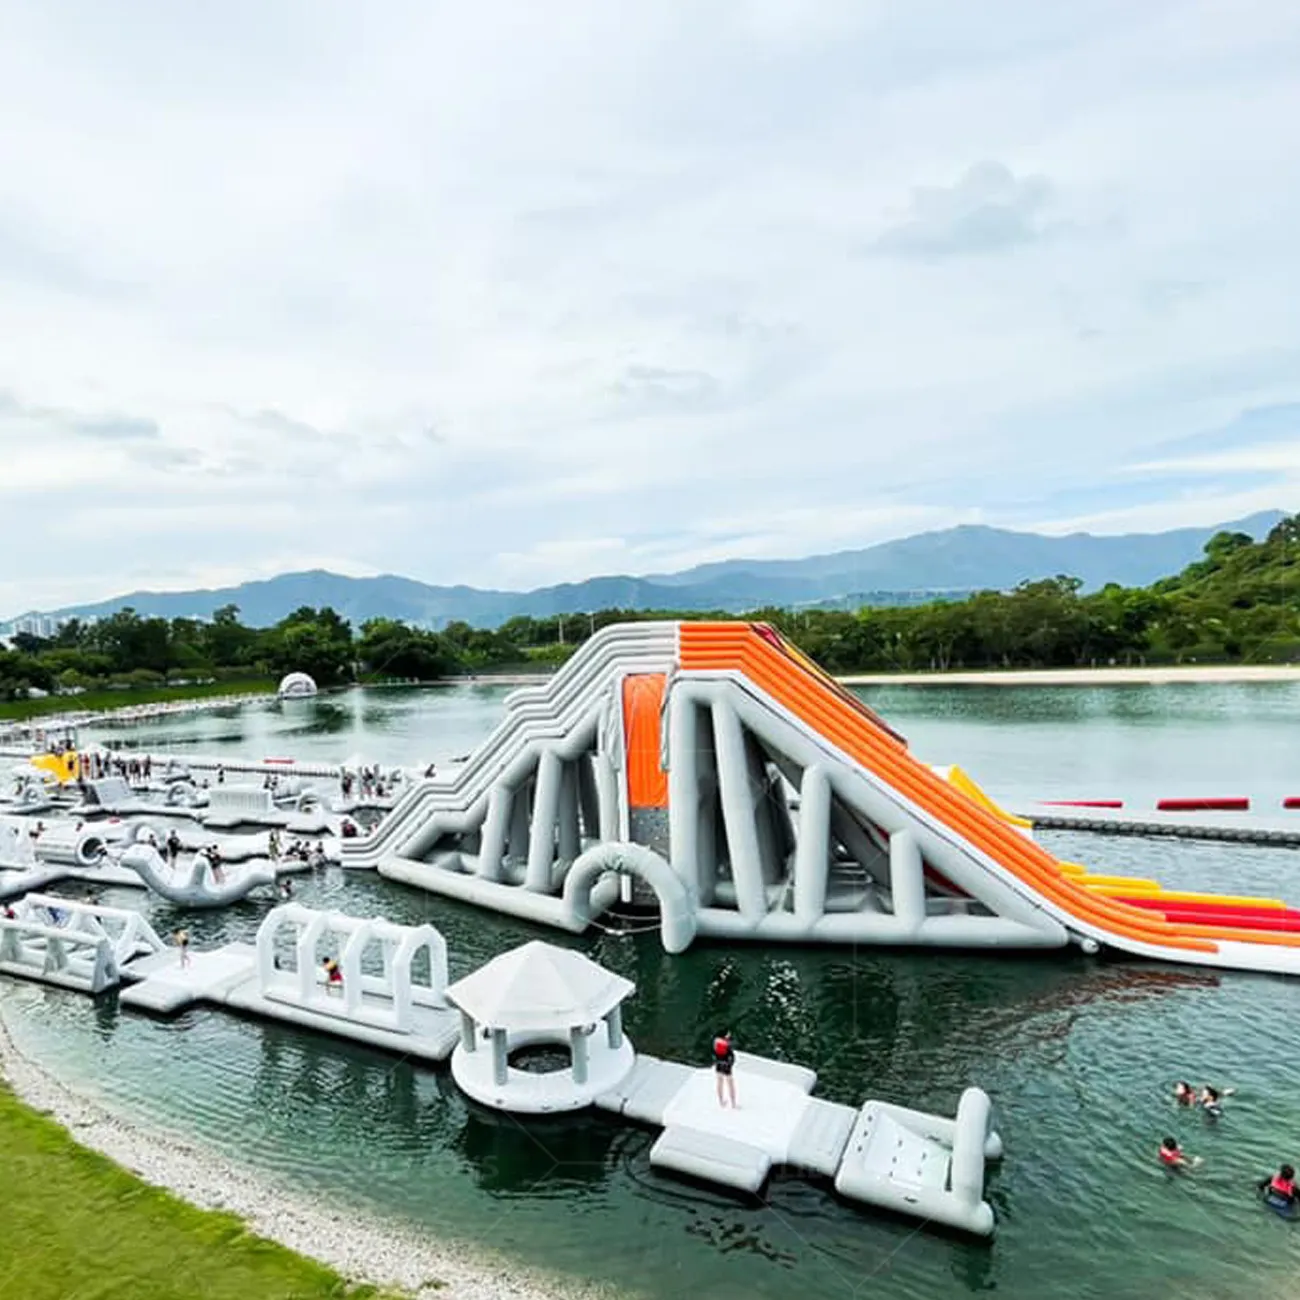 Aufblasbarer Aquapark kommerzieller aufblasbarer Wasserpark mit Wasser rutsche aufblasbarer schwimmender Wasserpark